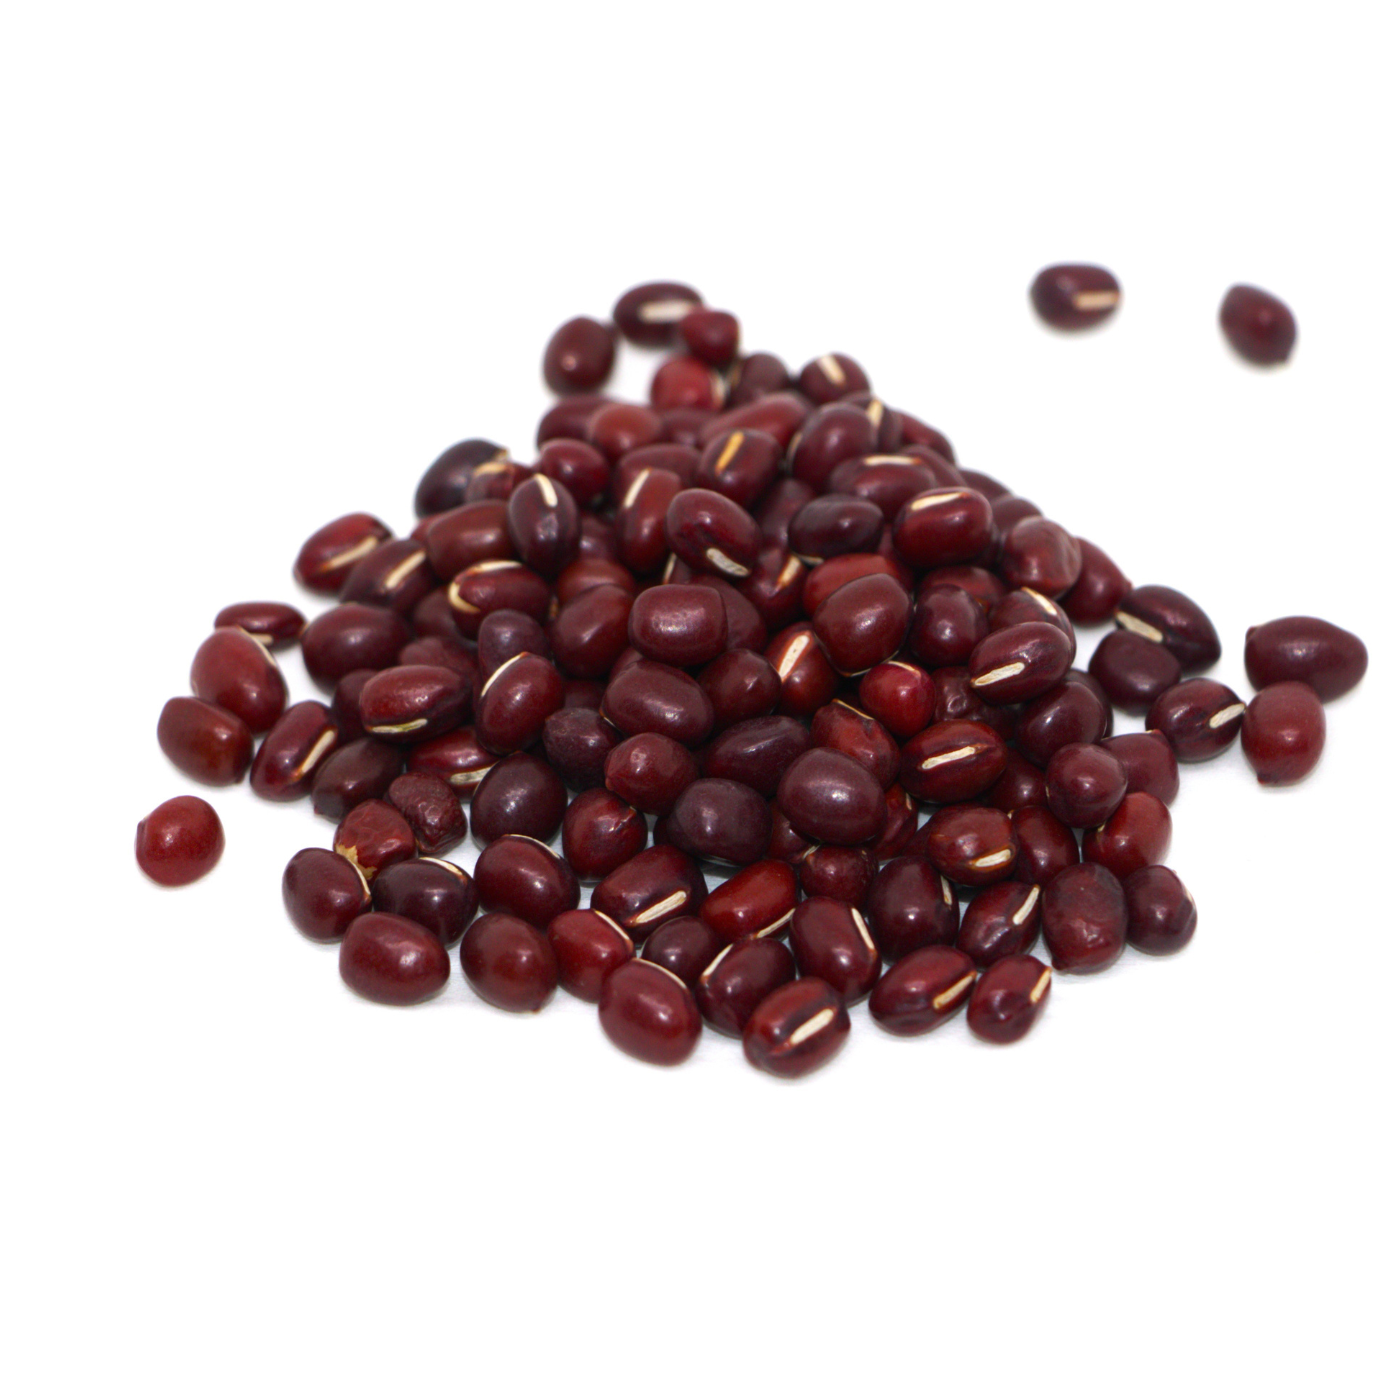 Organic seeds of adzuki bean